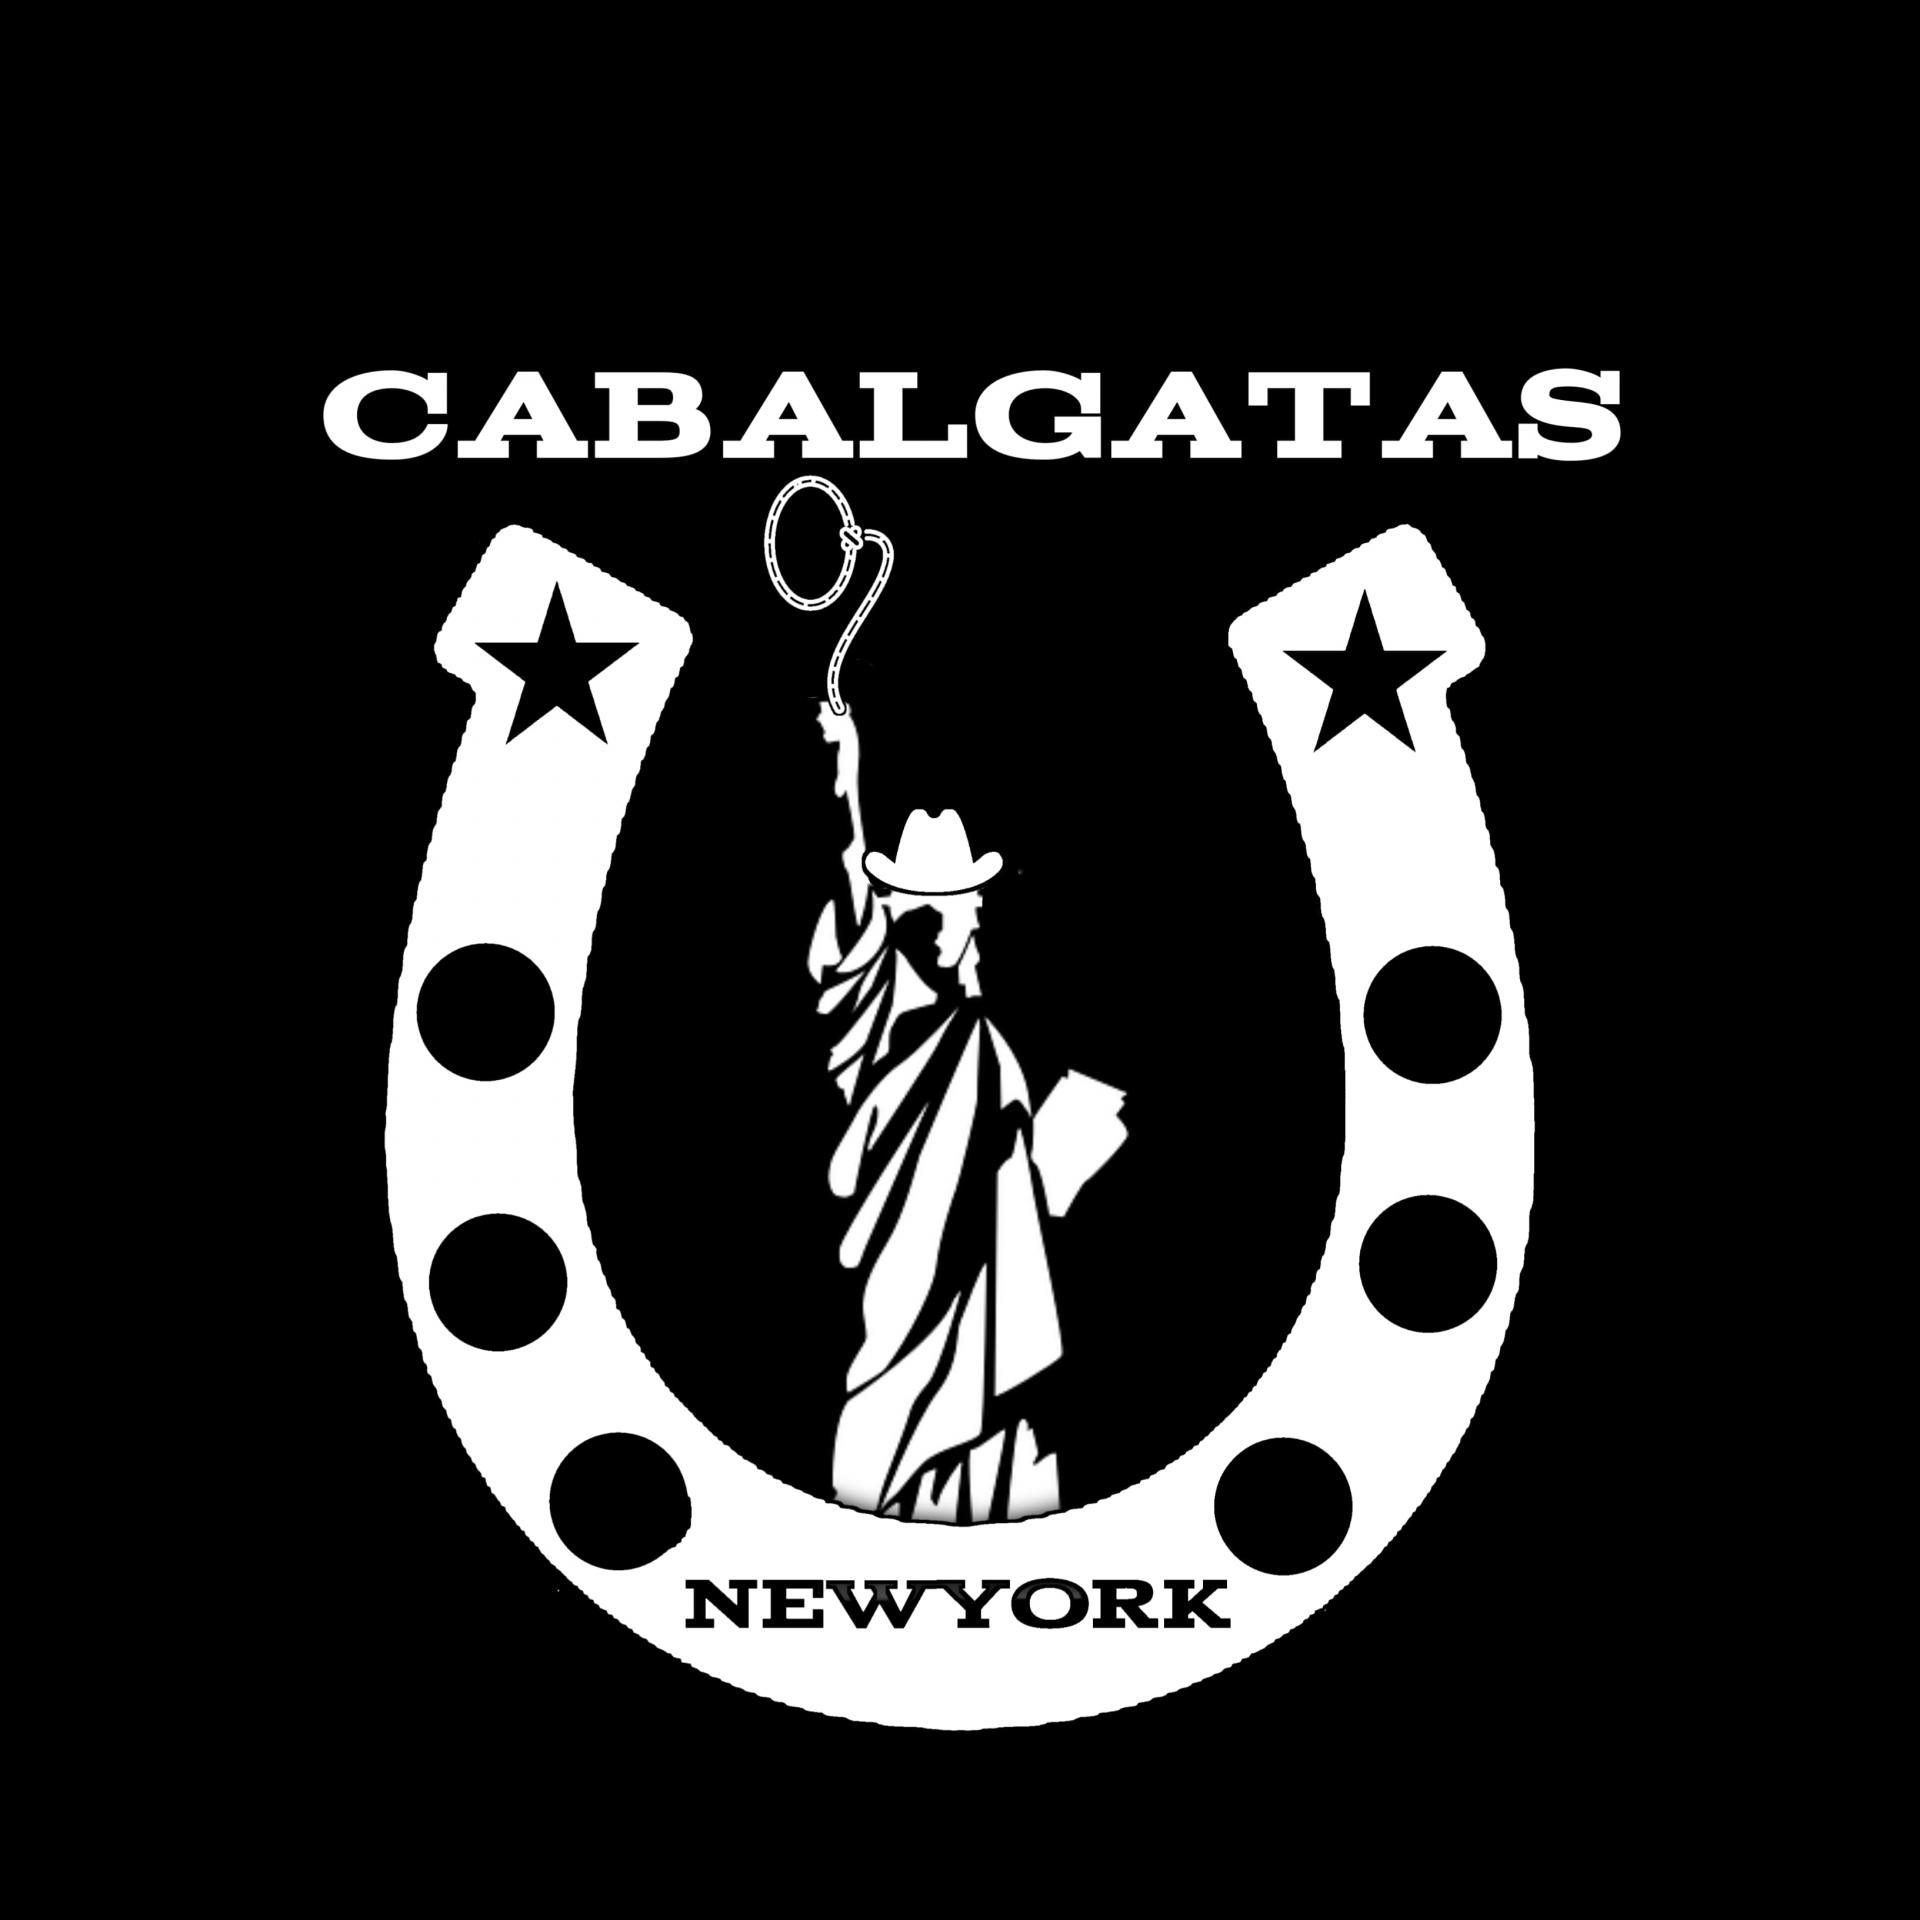 CABALGATAS NEW YORK